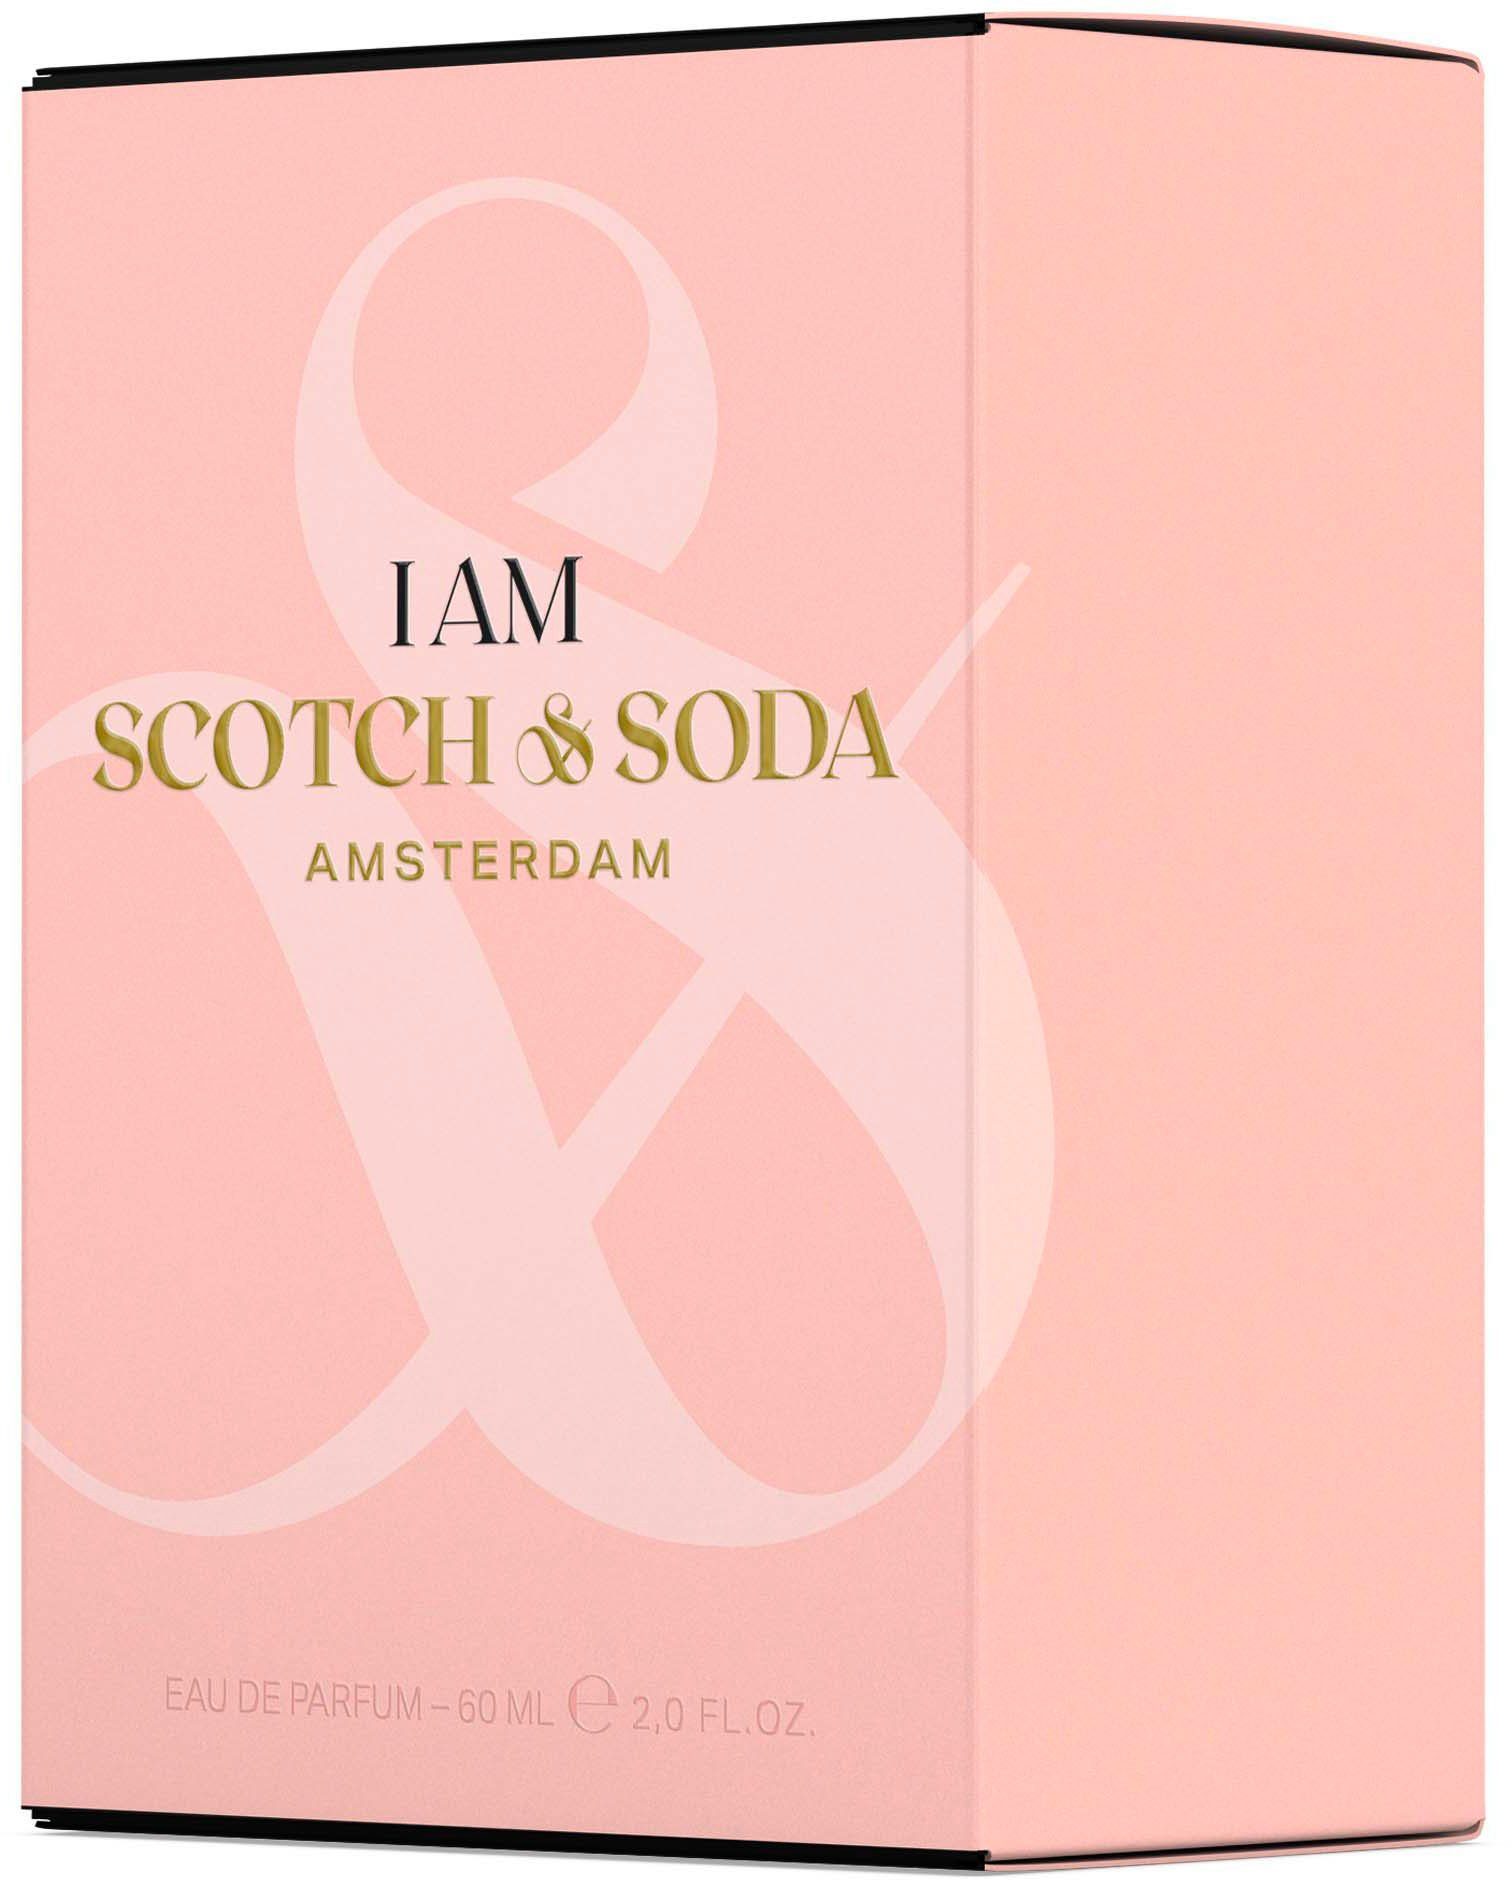 Scotch de Women AM Parfum & Eau Soda I